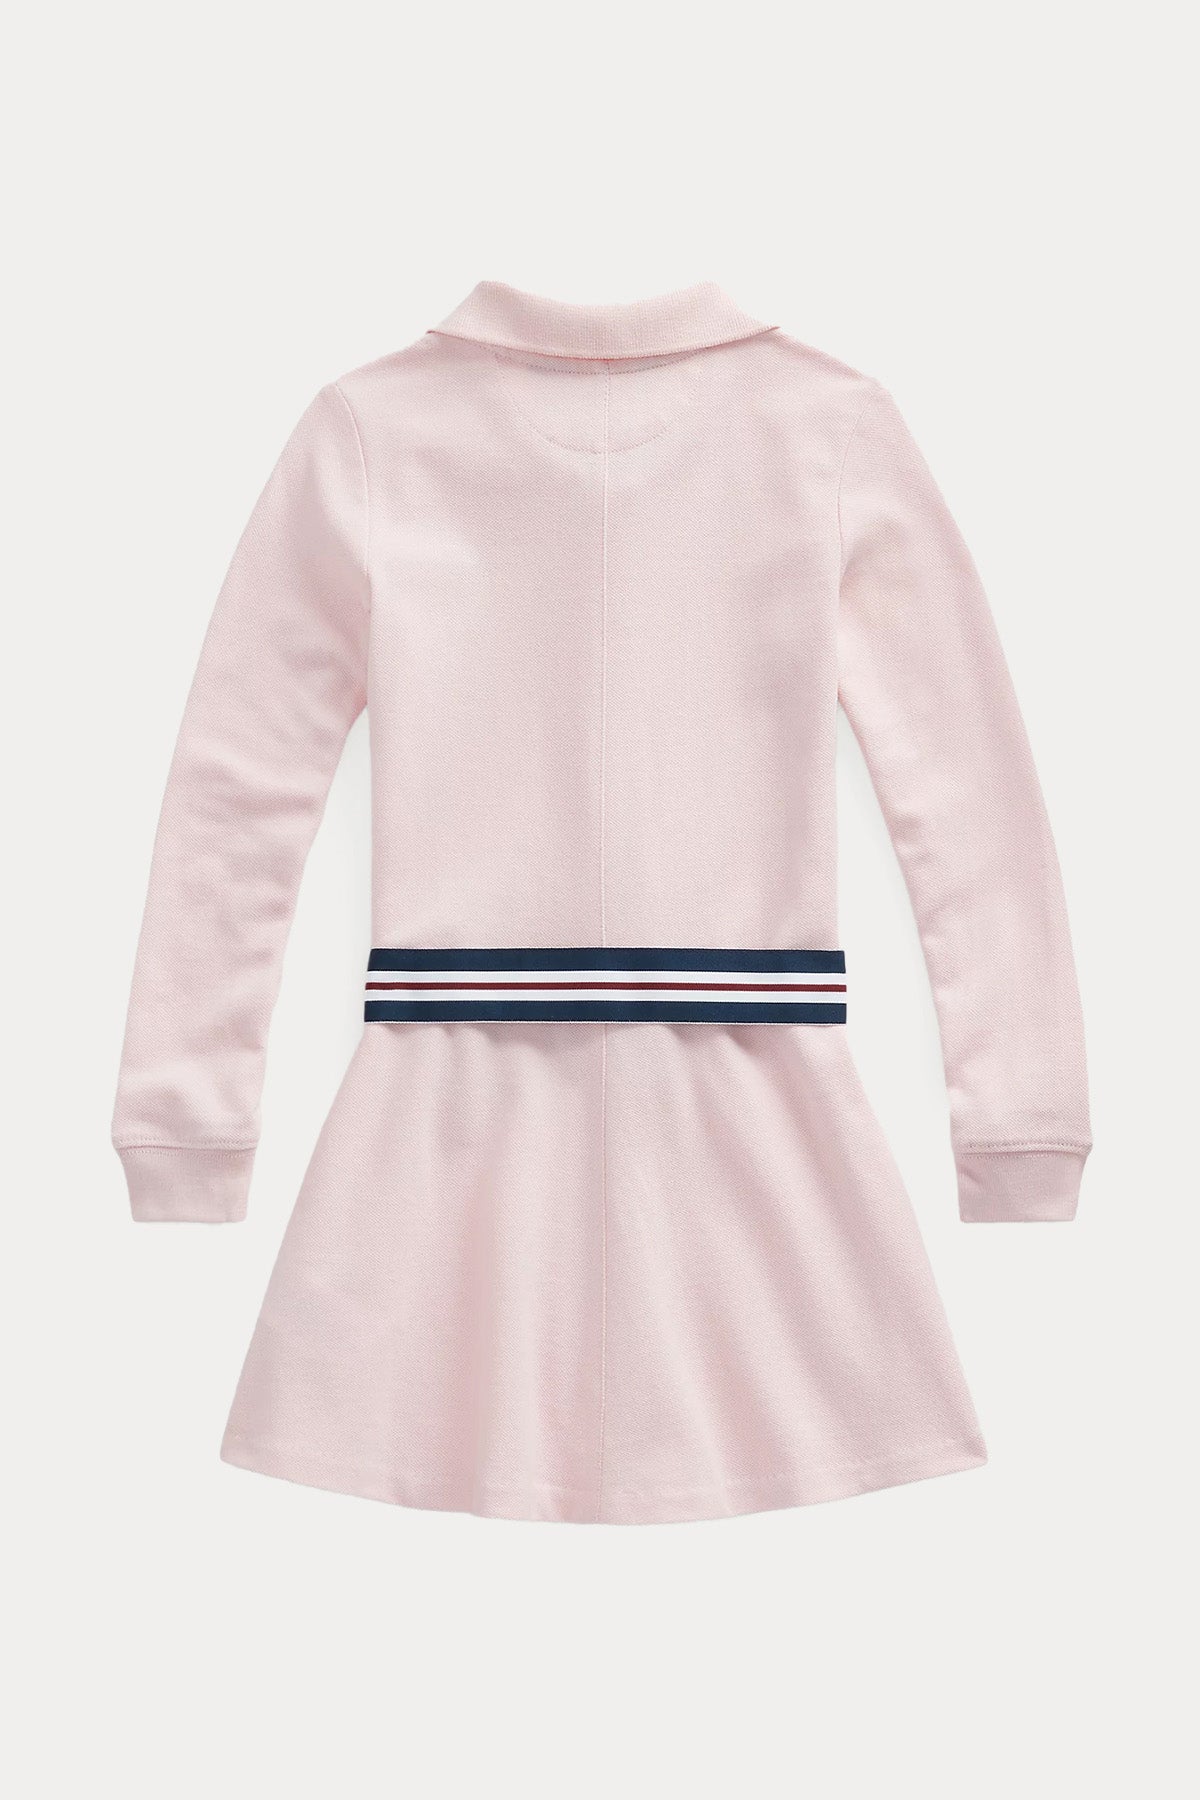 Polo Ralph Lauren Kids 3-6 Yaş Kız Çocuk Gömlek Elbise-Libas Trendy Fashion Store